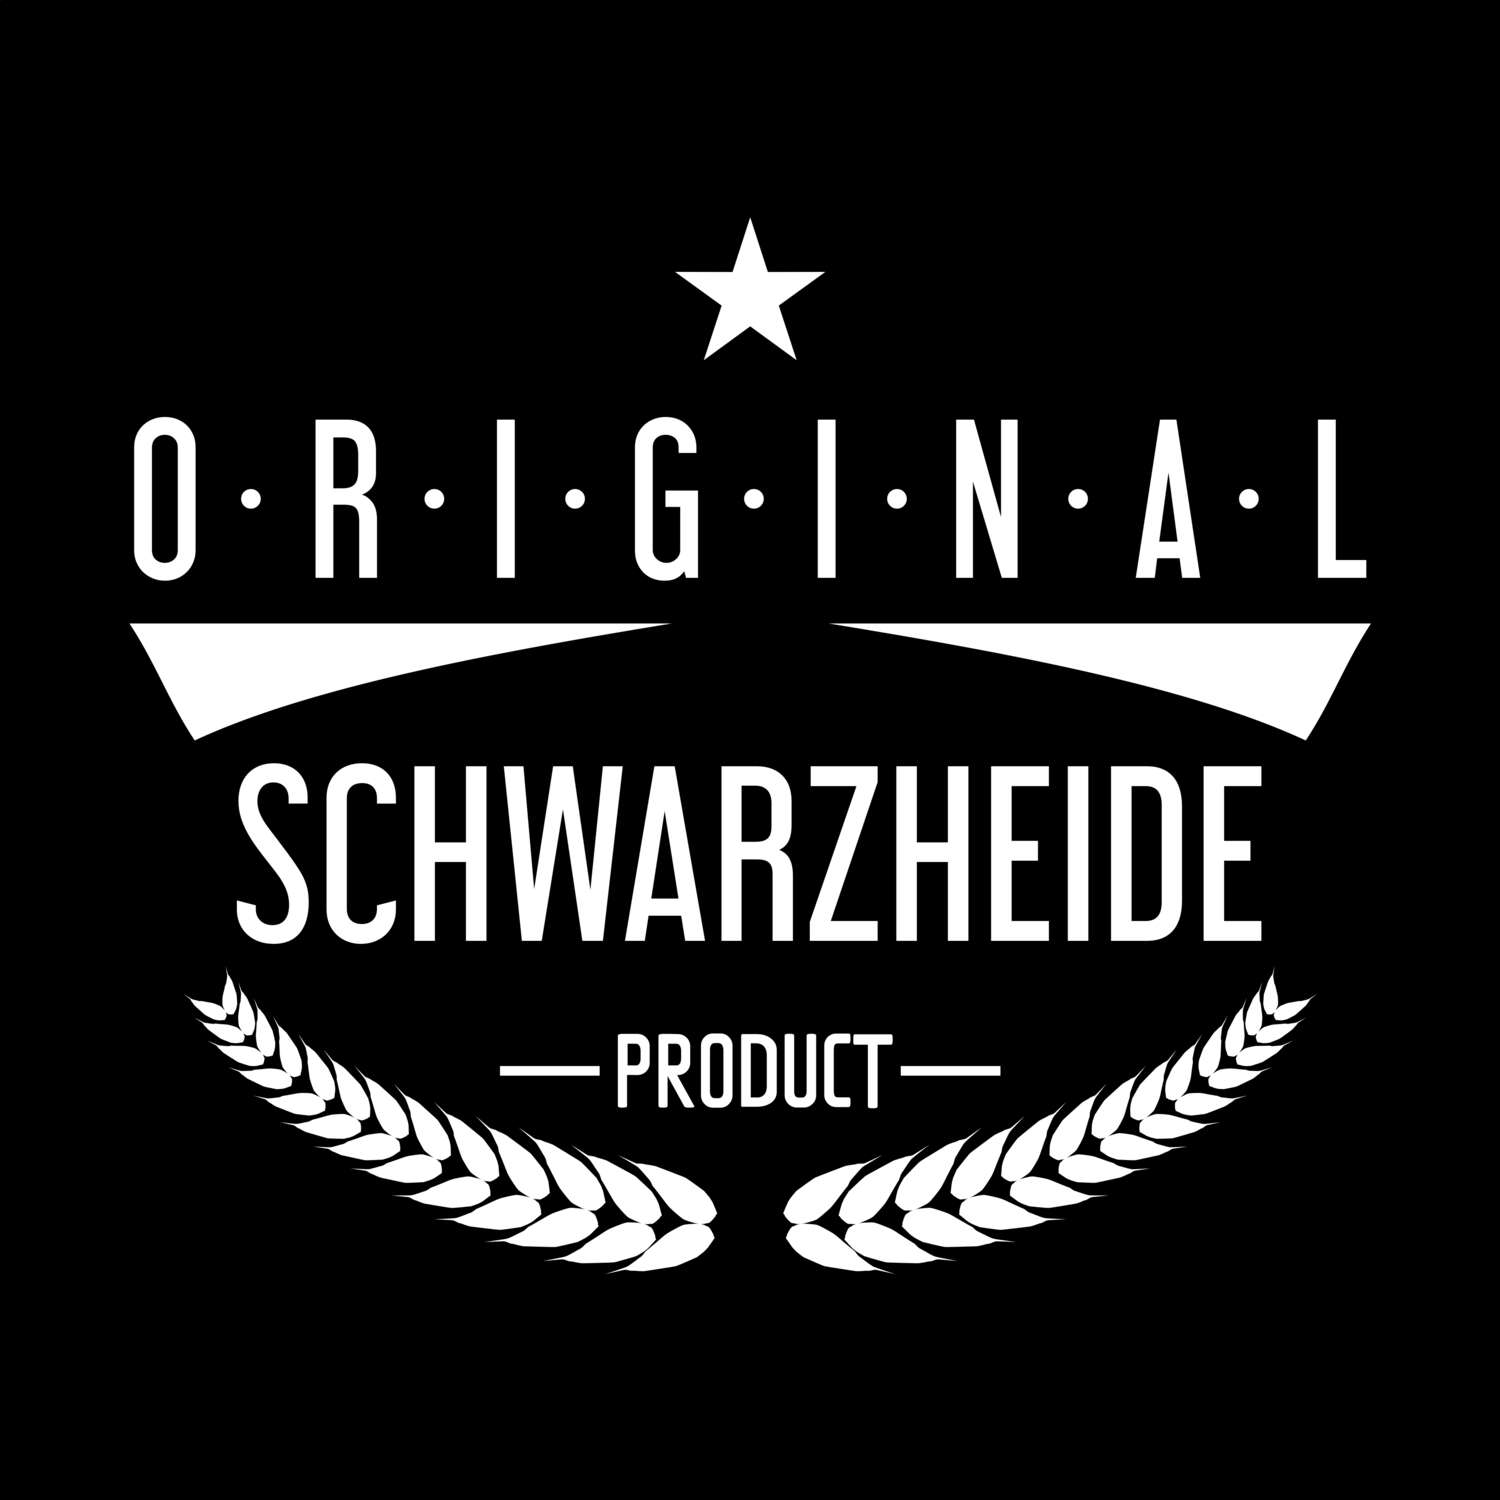 Schwarzheide T-Shirt »Original Product«